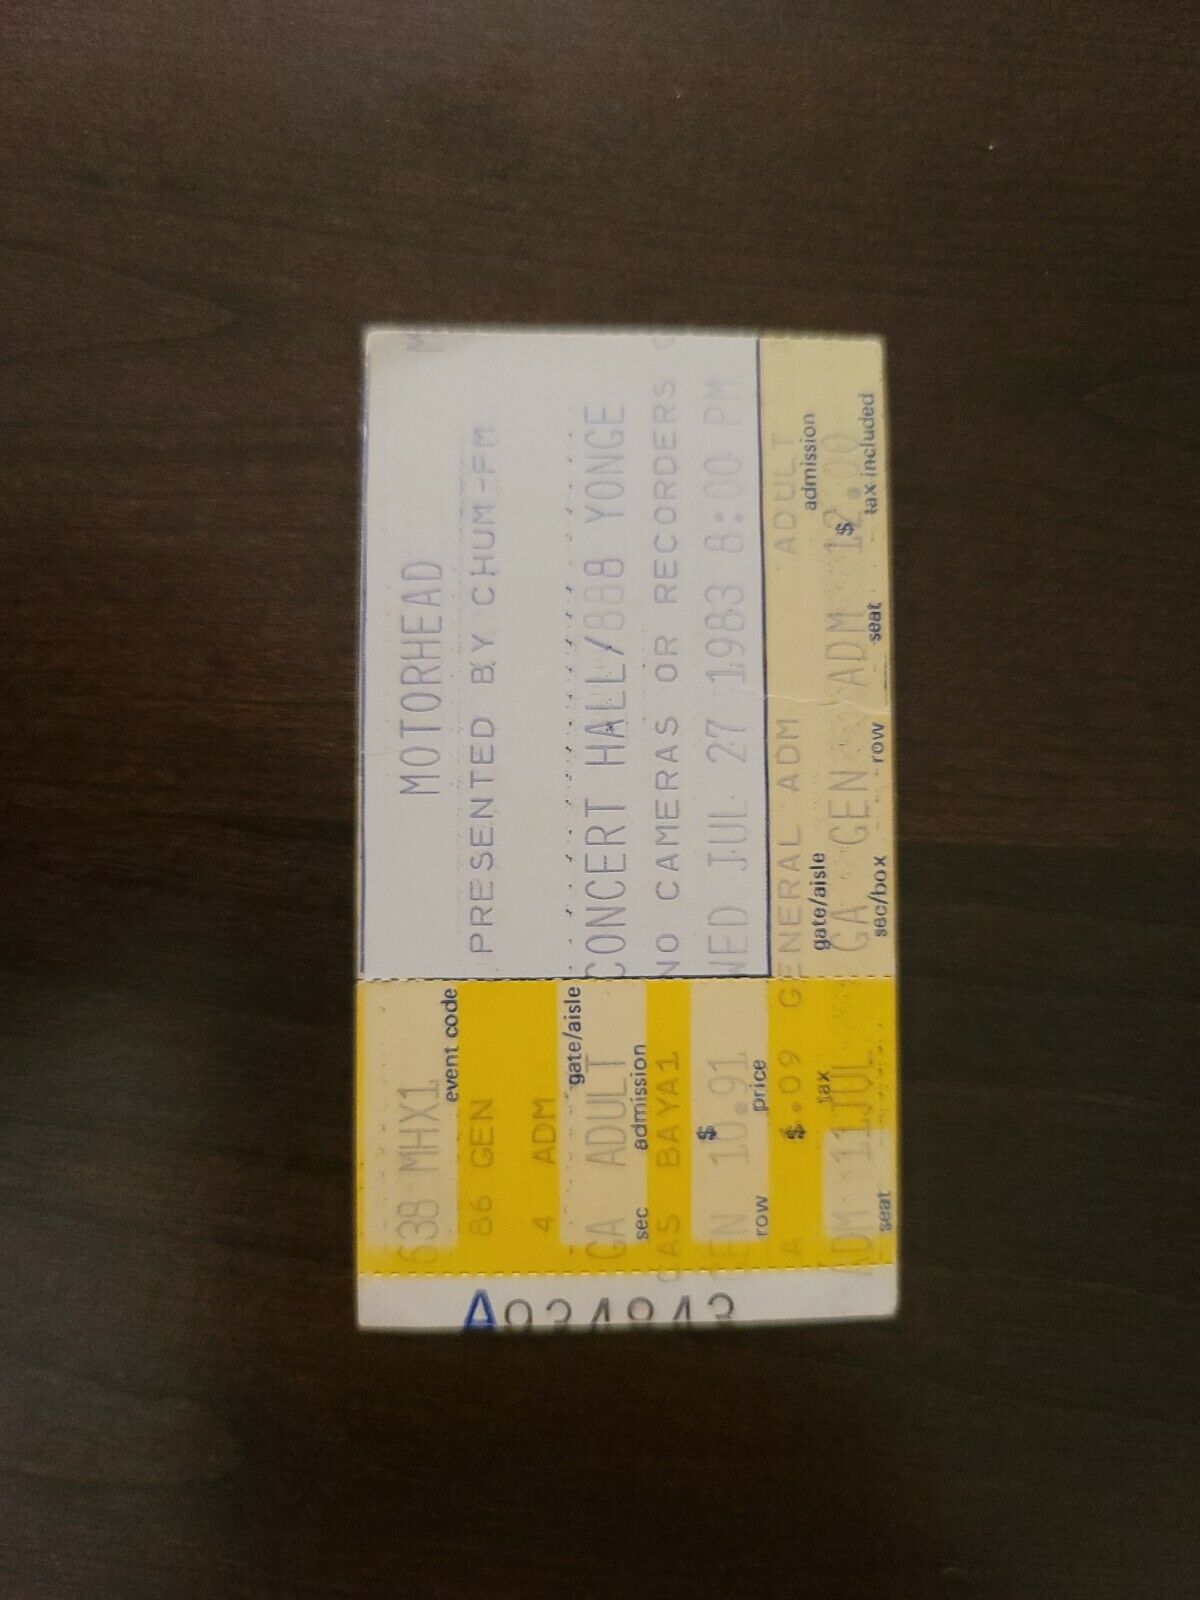 Motorhead 1983, Toronto Concert Hall Original Concert Ticket Stub